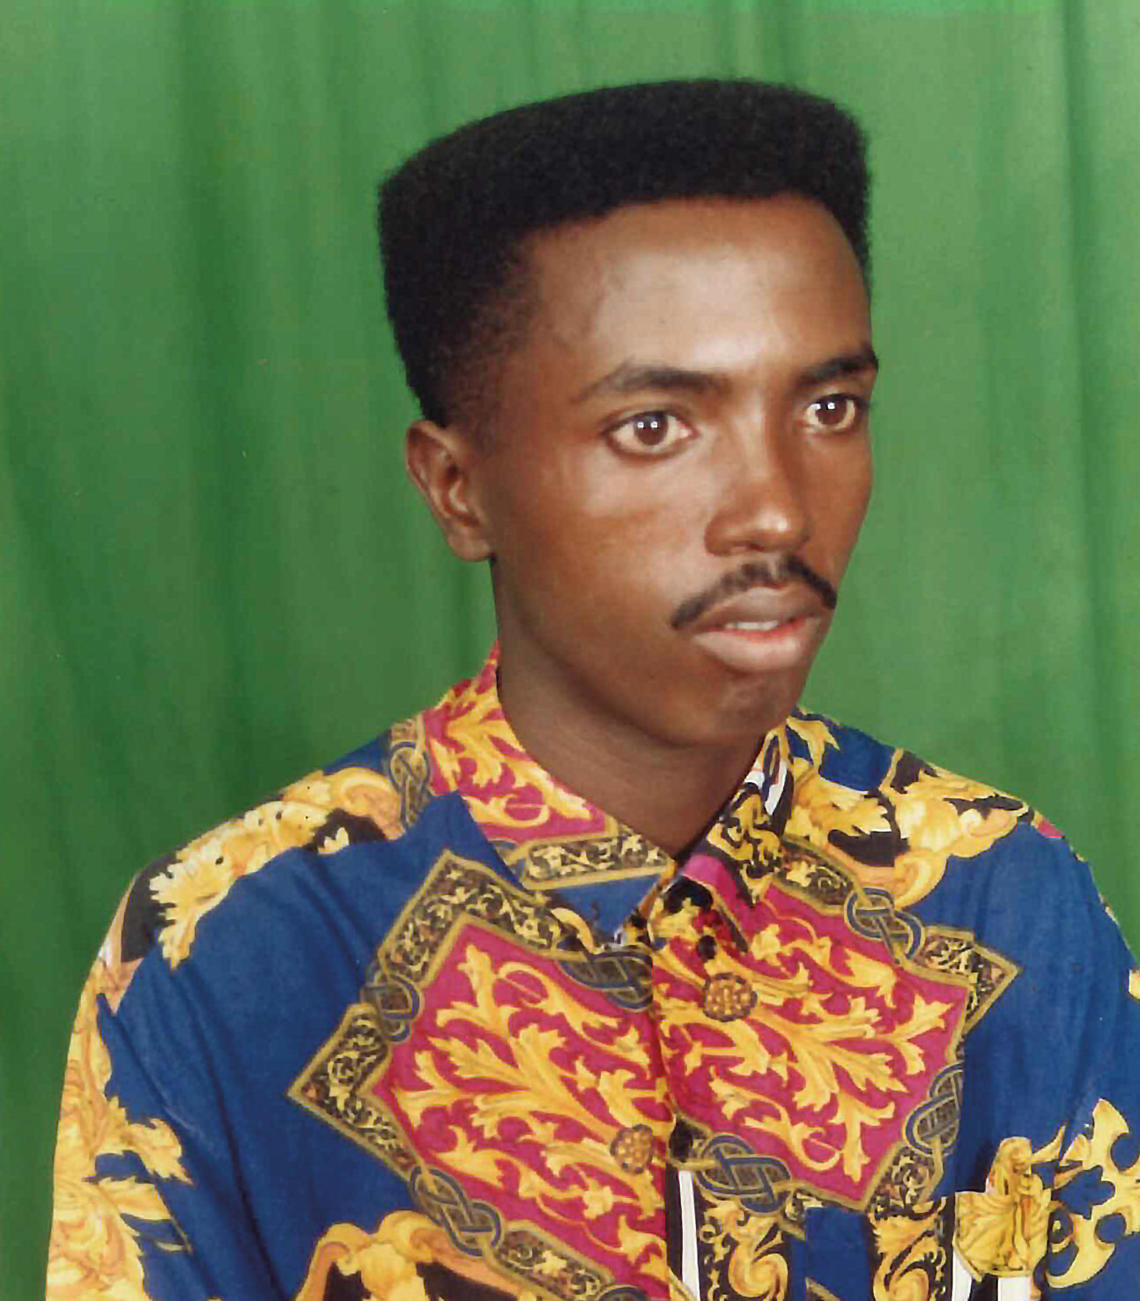 Jean-Claude in Rwanda, circa 1994